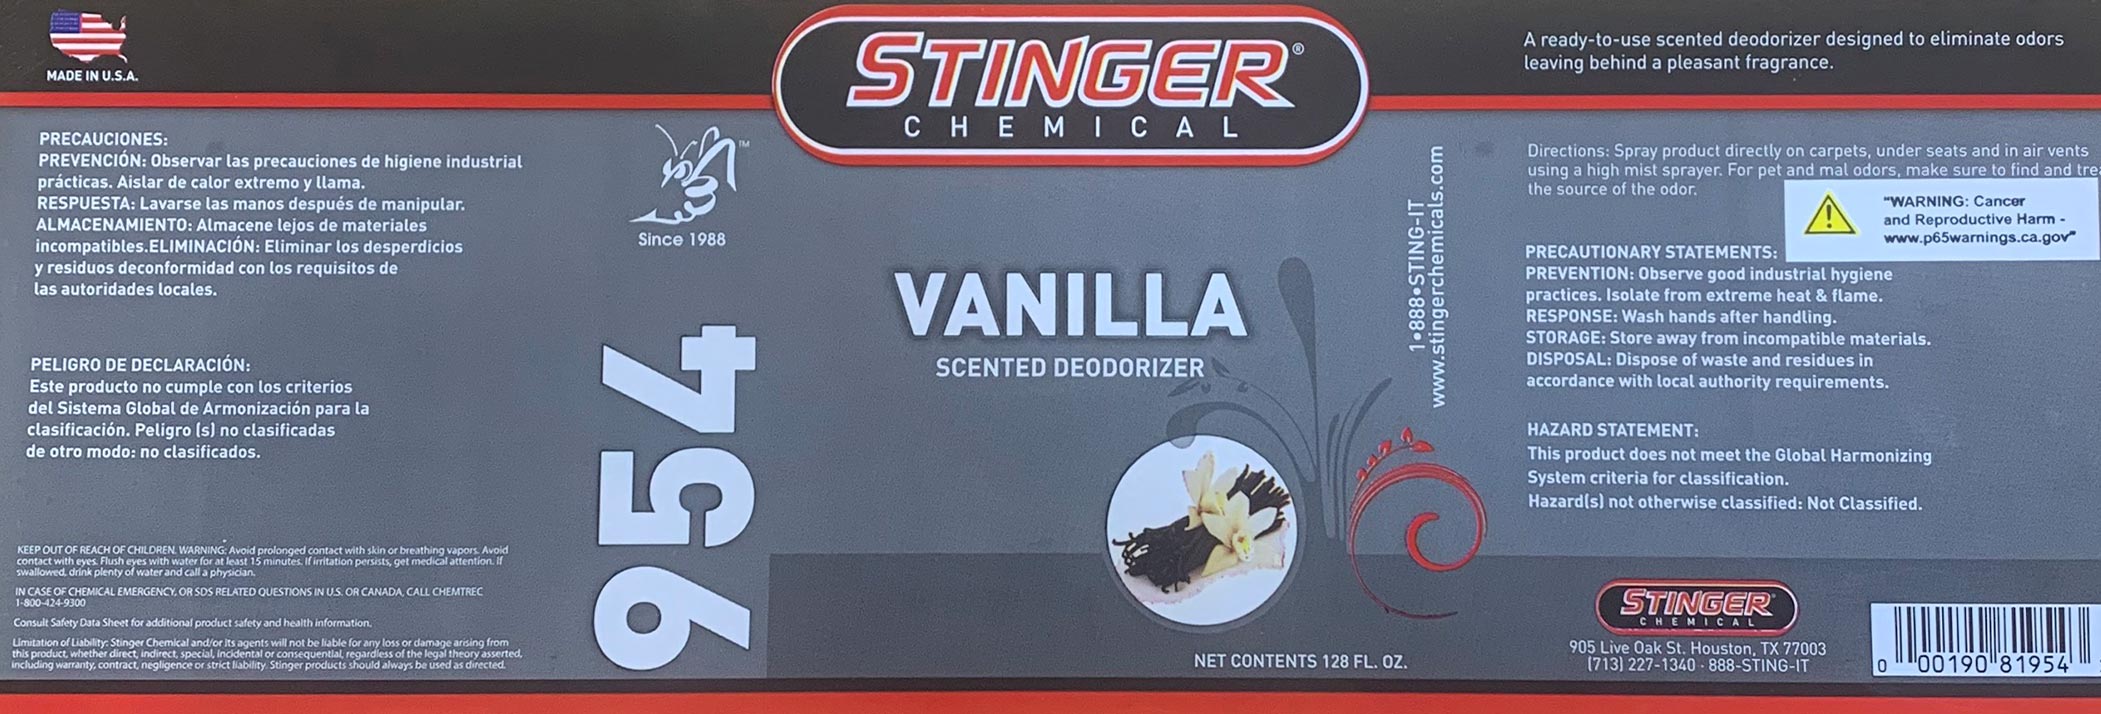 stinger-954-label